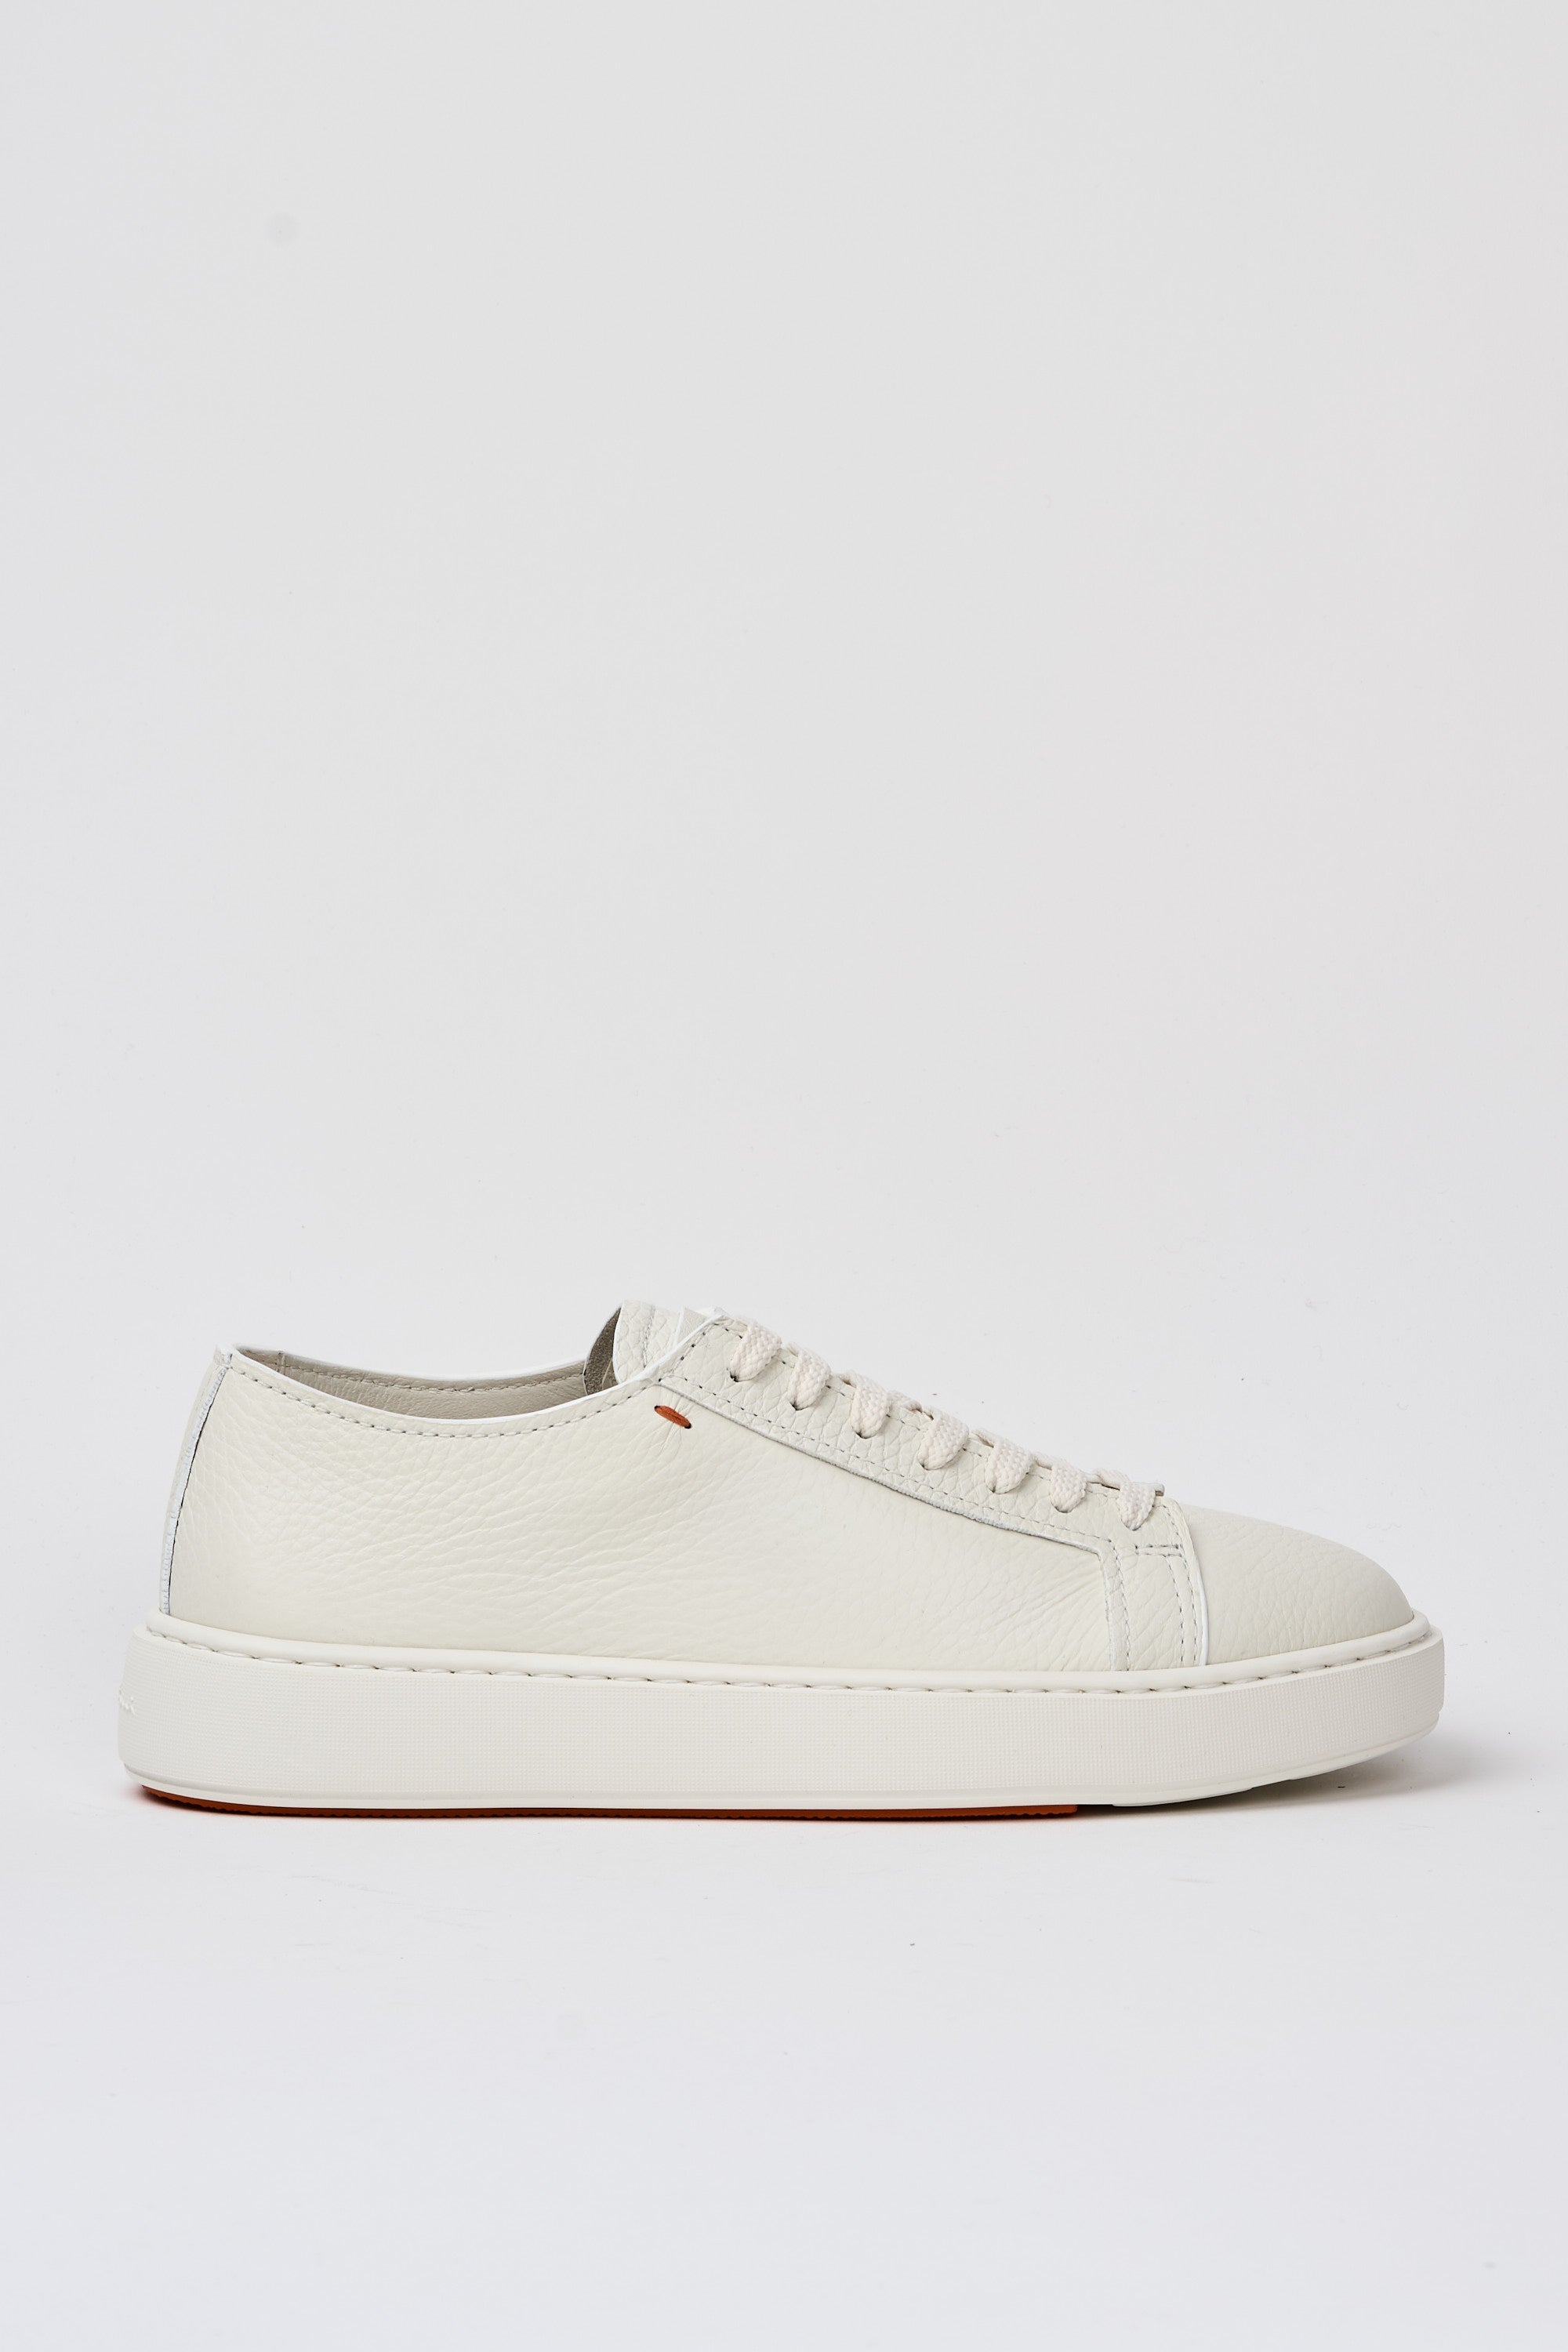 Santoni Leather Tumbled Sneakers White-1